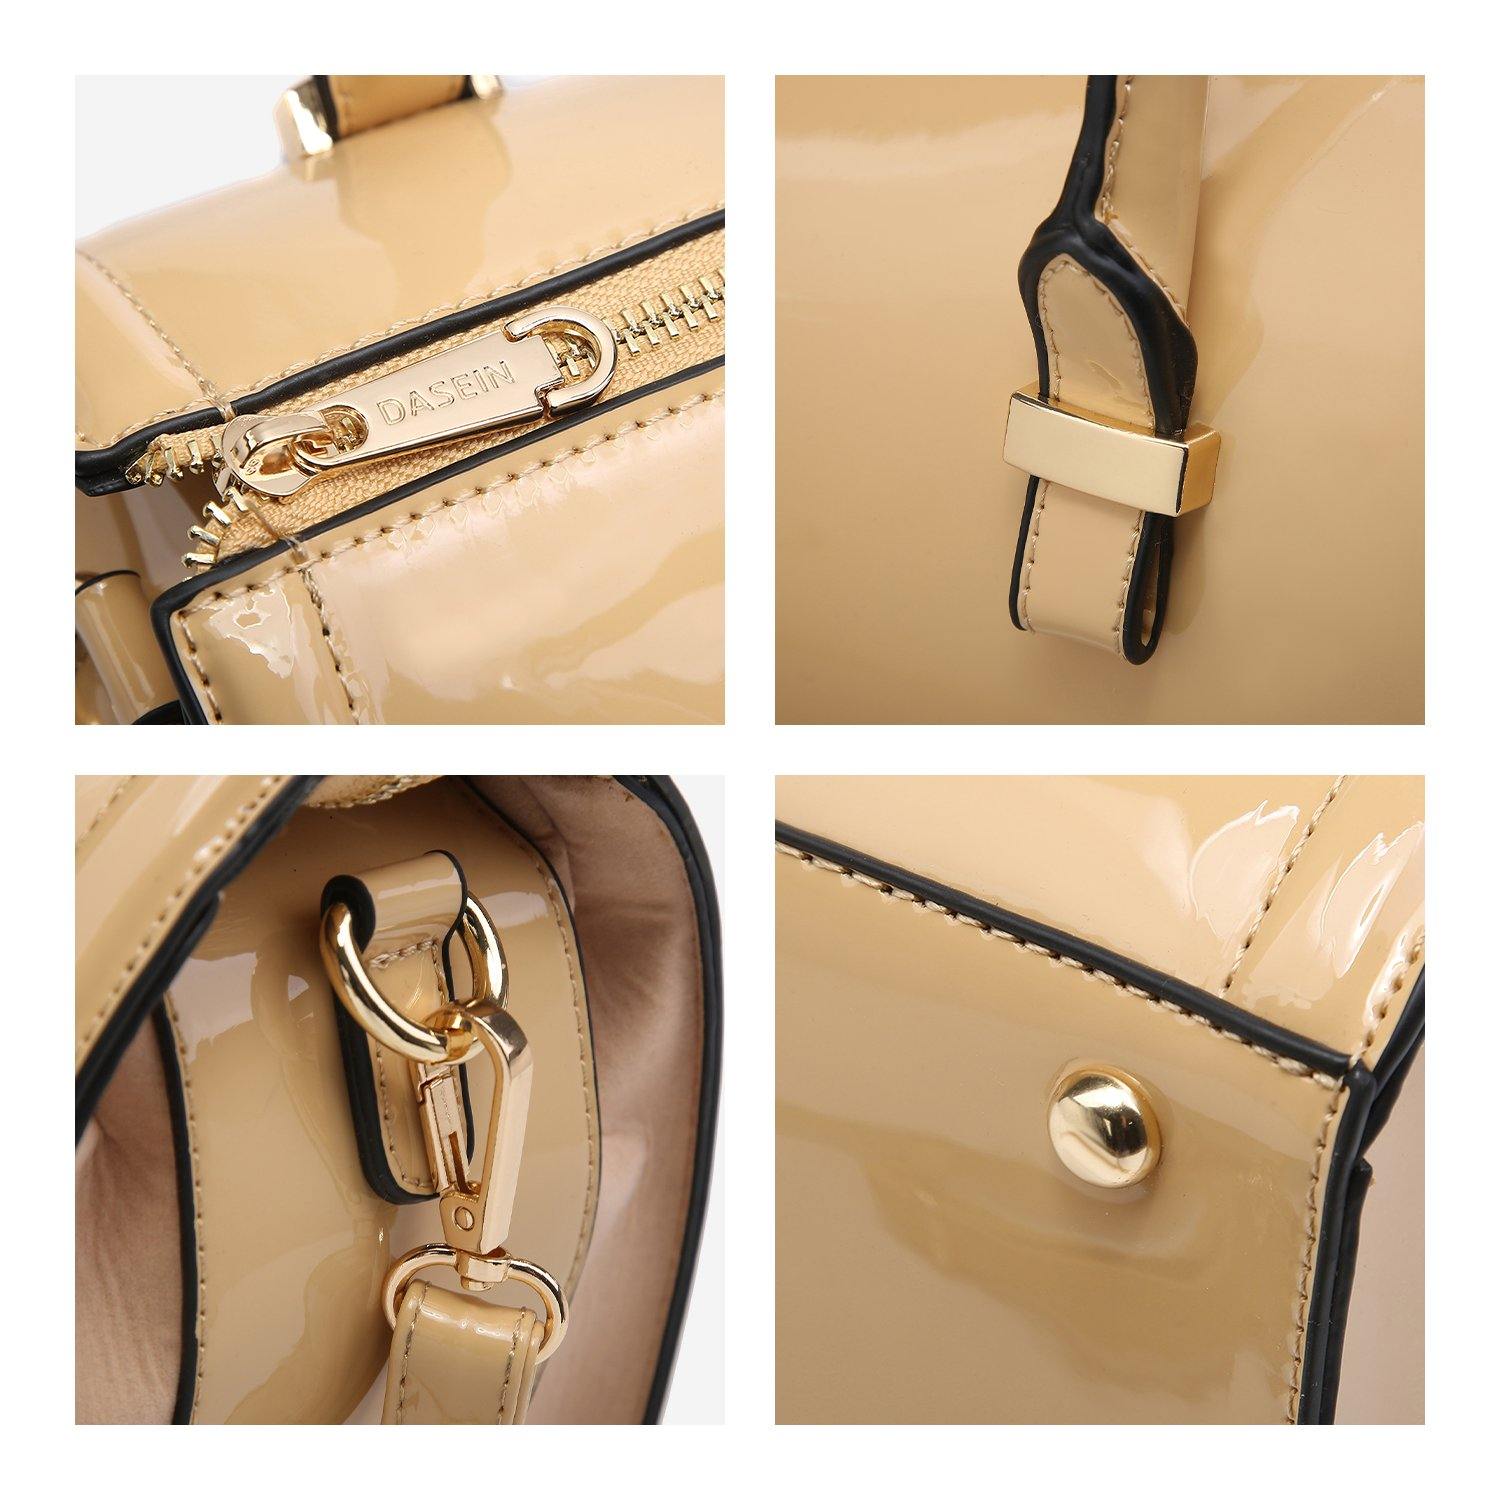  ZiMing Top Handle Handbags Women Shiny Patent Leather